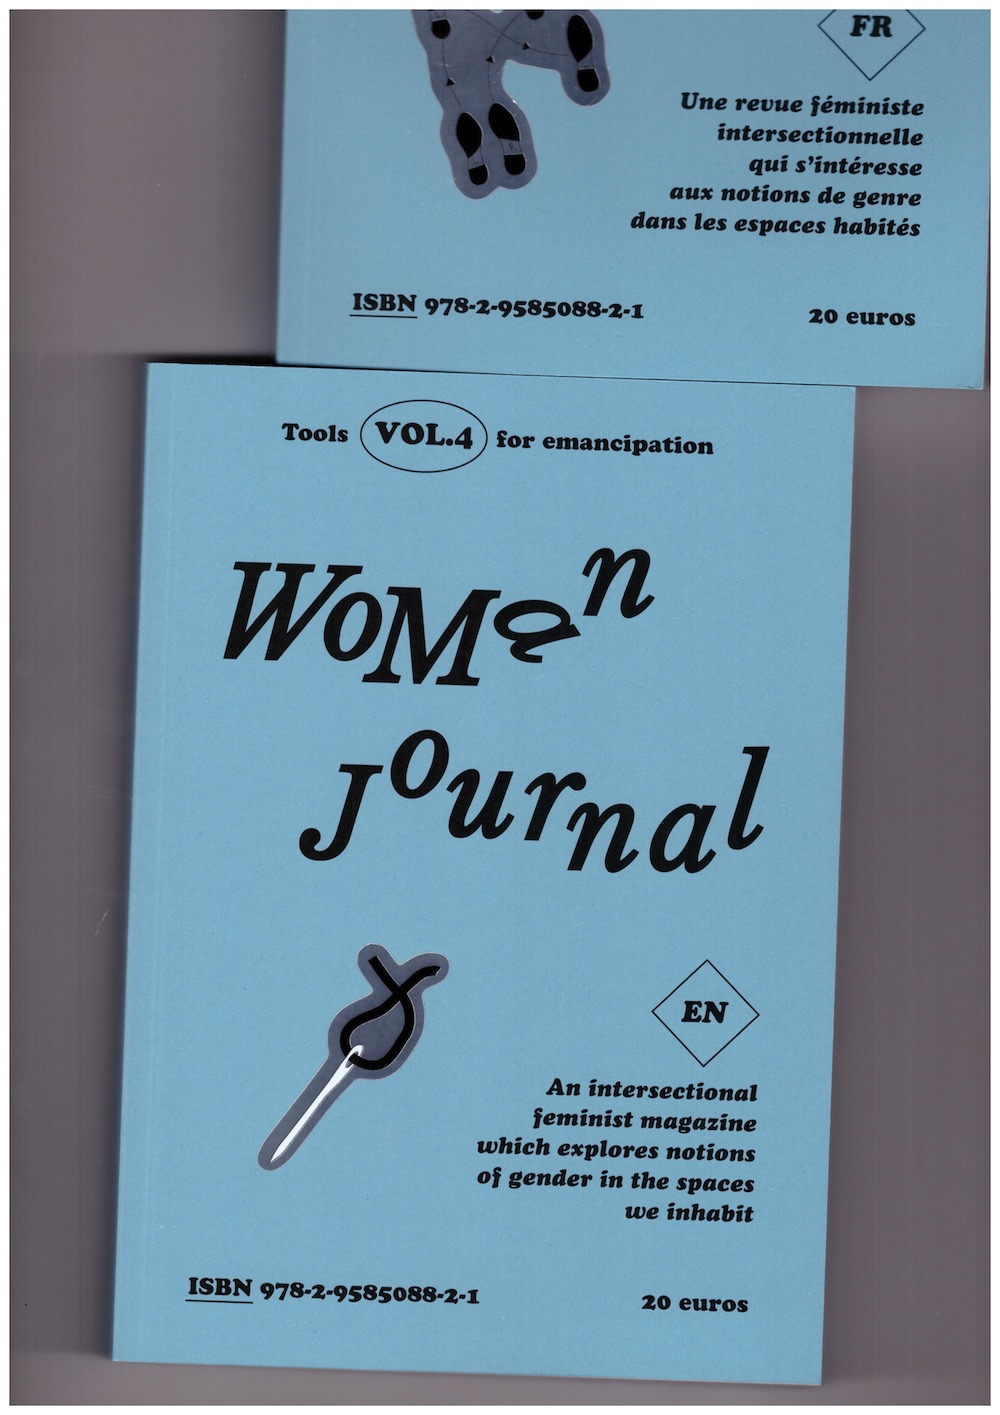 MACARY-CARNEY, Chloé; CHANLIAU, Léticia; MALIC, Urška (eds.)  - Woman Journal Volume 4 : Outils d’émancipation / Tools for emancipation